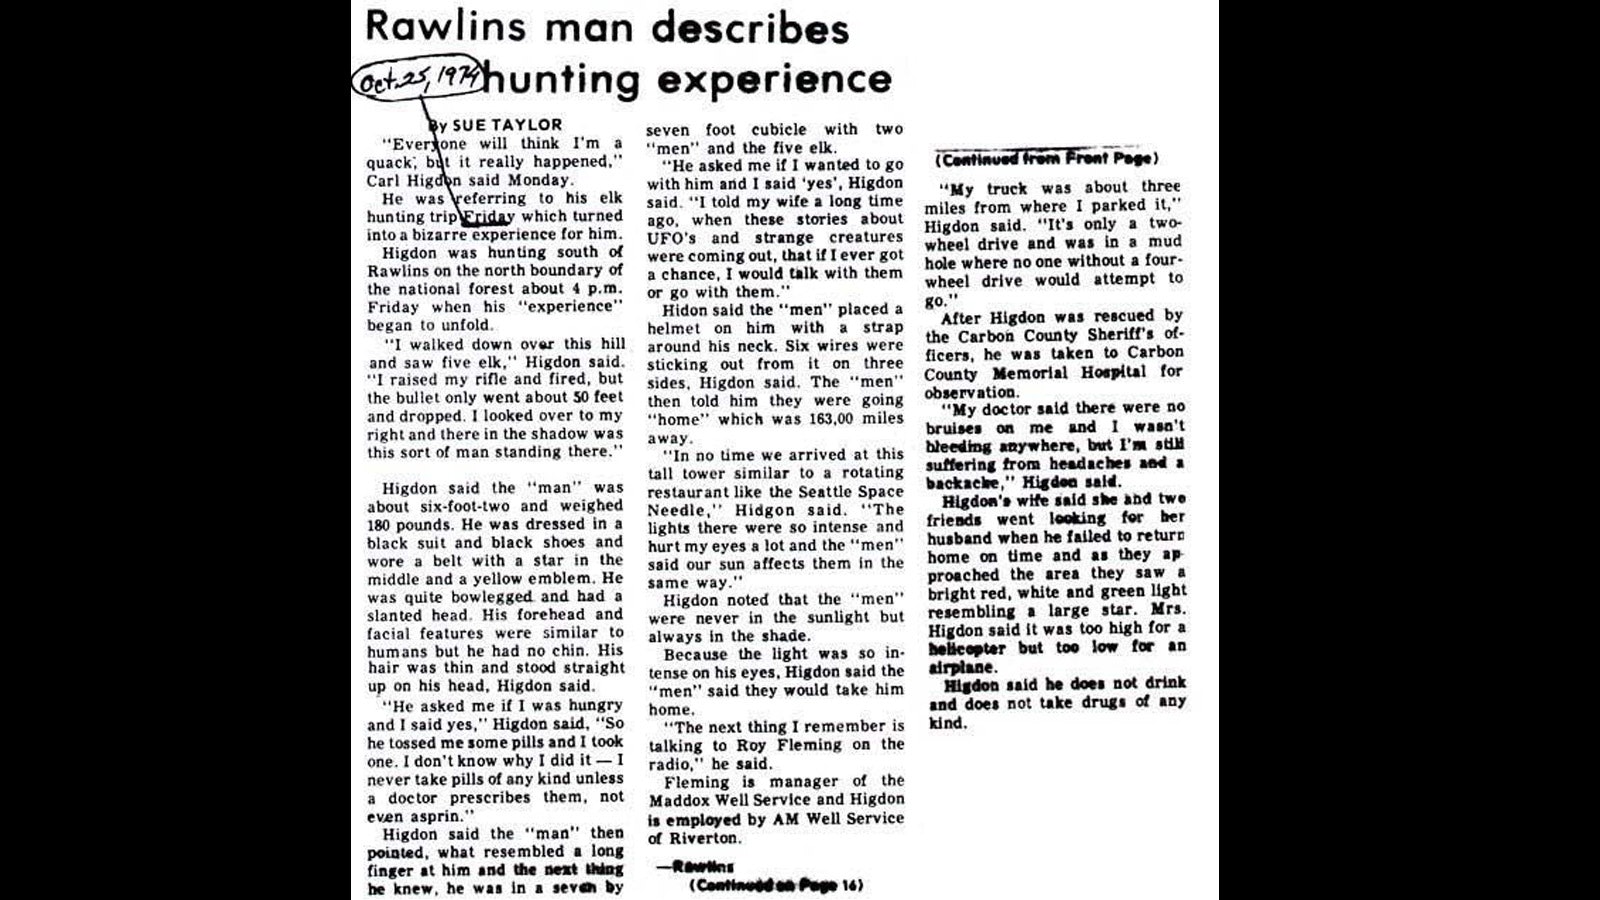 An October 1974 story in the Casper Star-Tribune recounts the alien encounter Carl Hidden of Rawlins had.